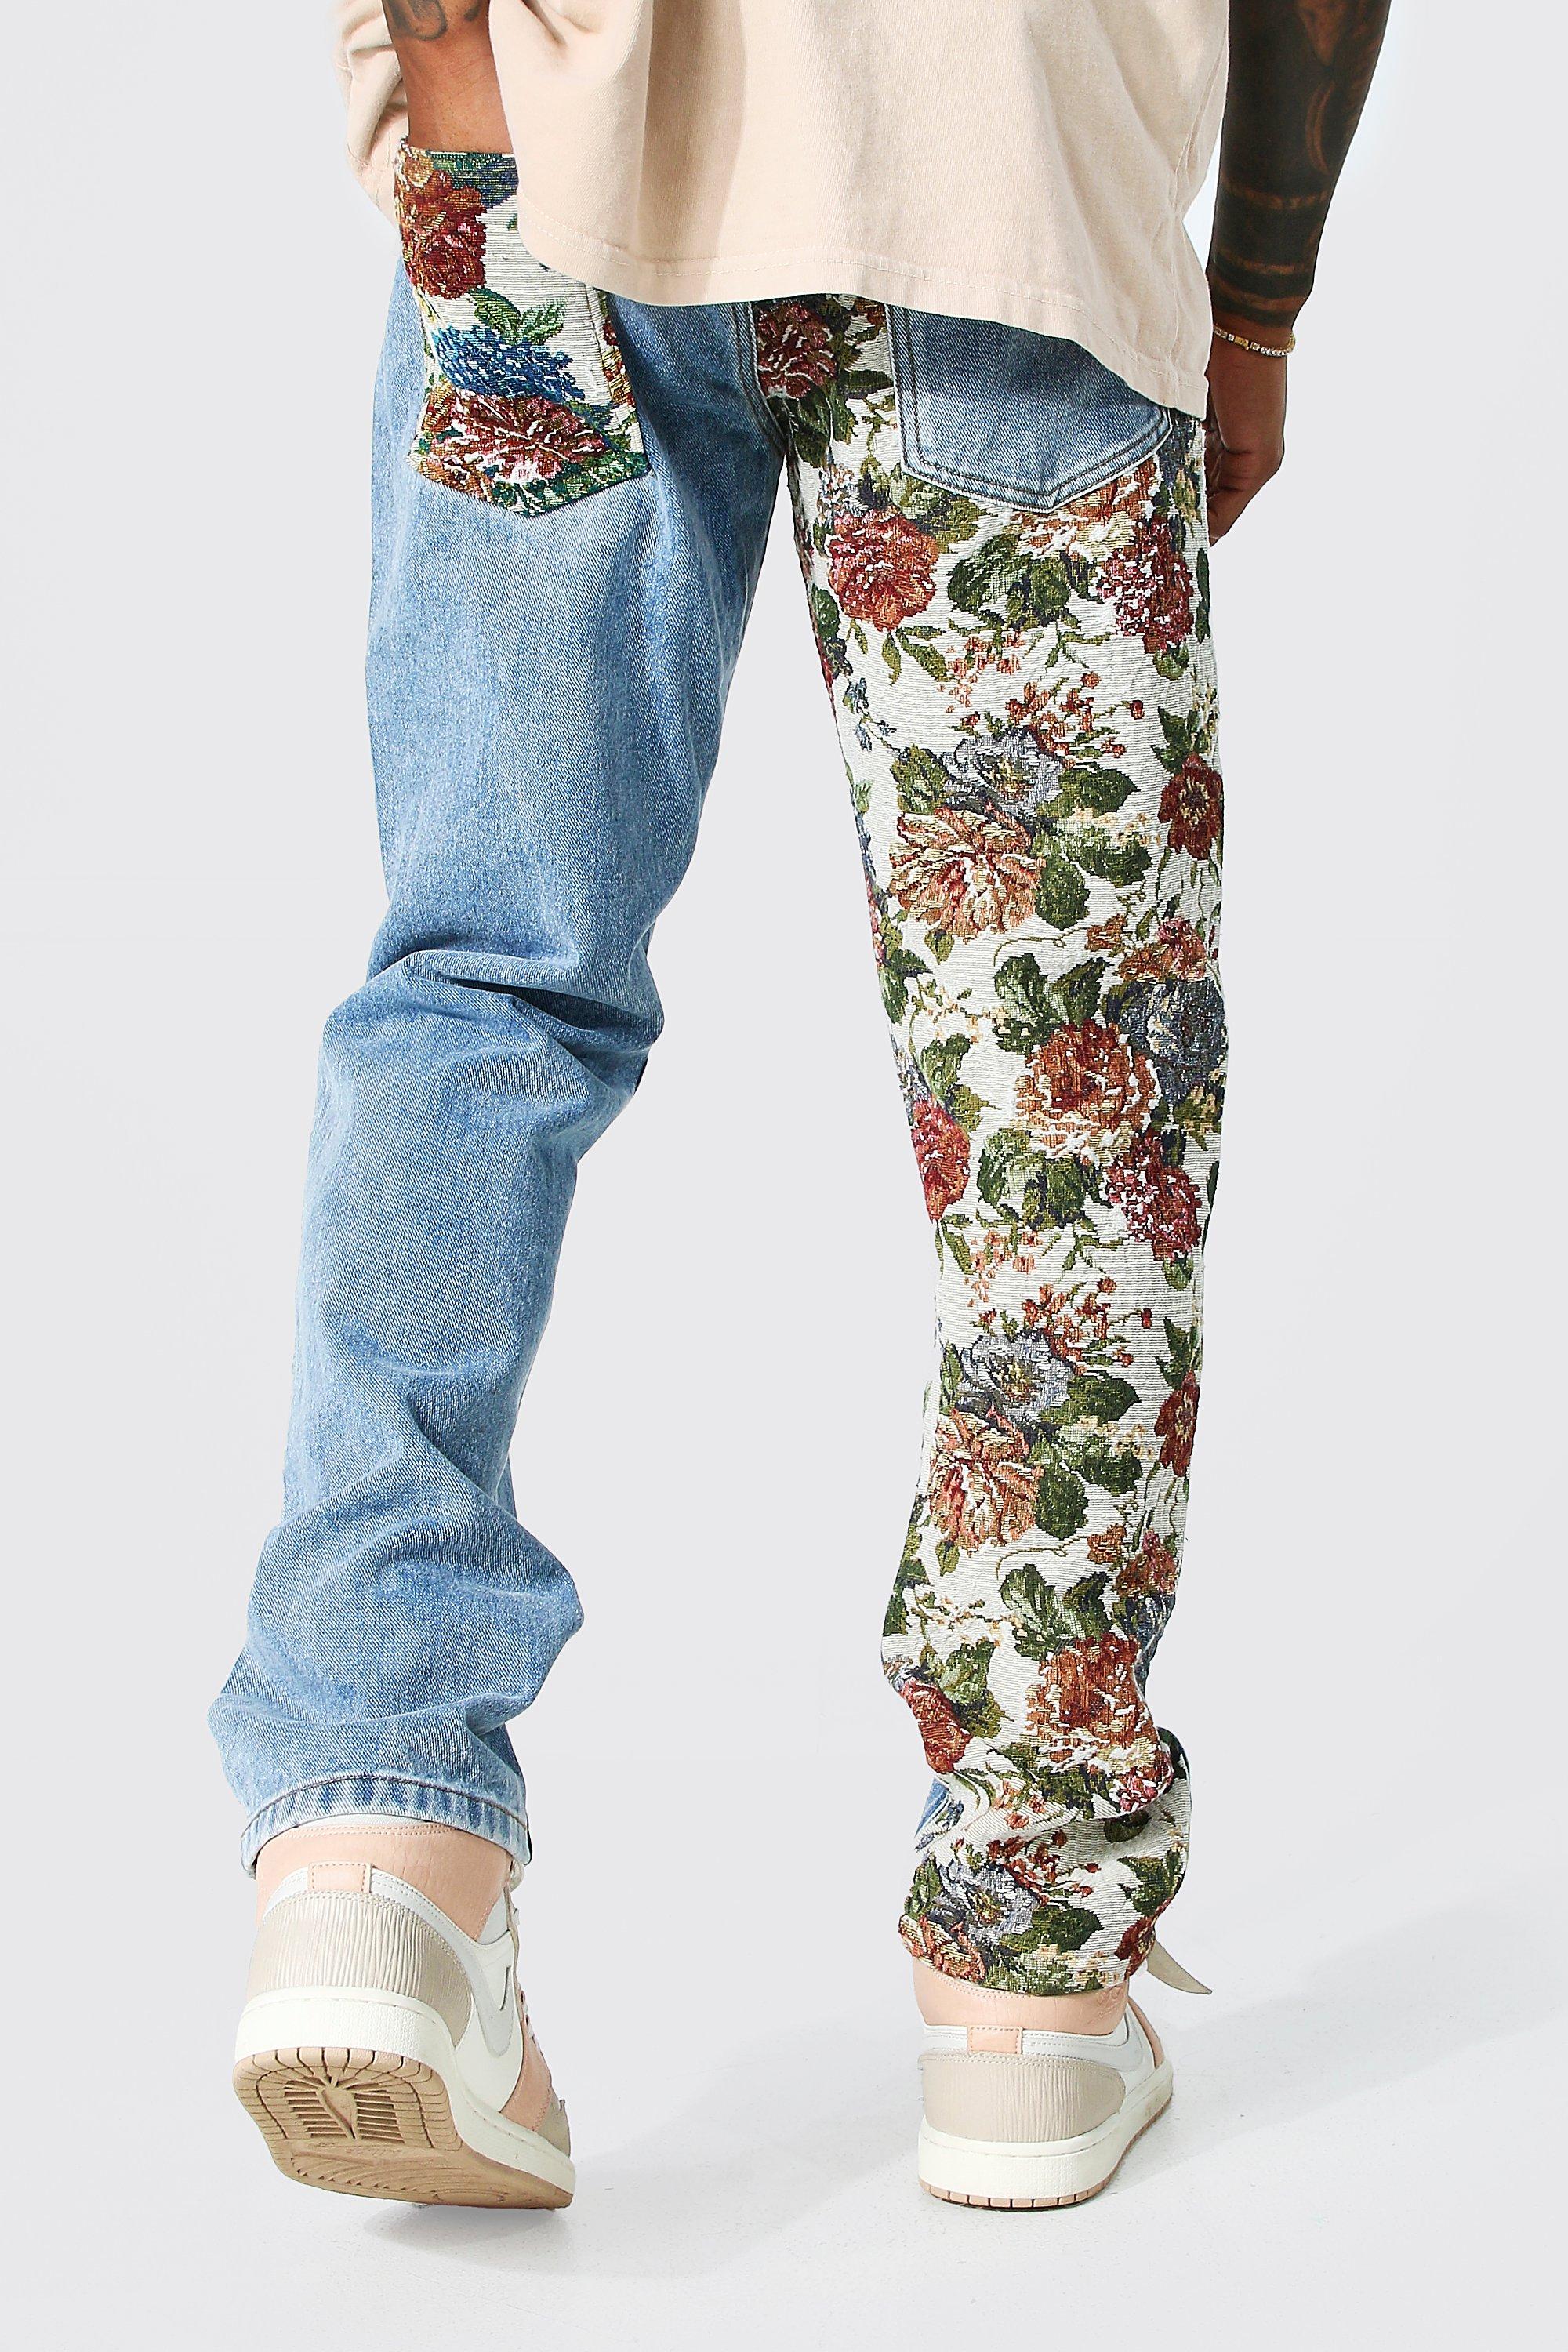 DIY, Custom Jaded Man TAPESTRY PATCH Denim Jeans